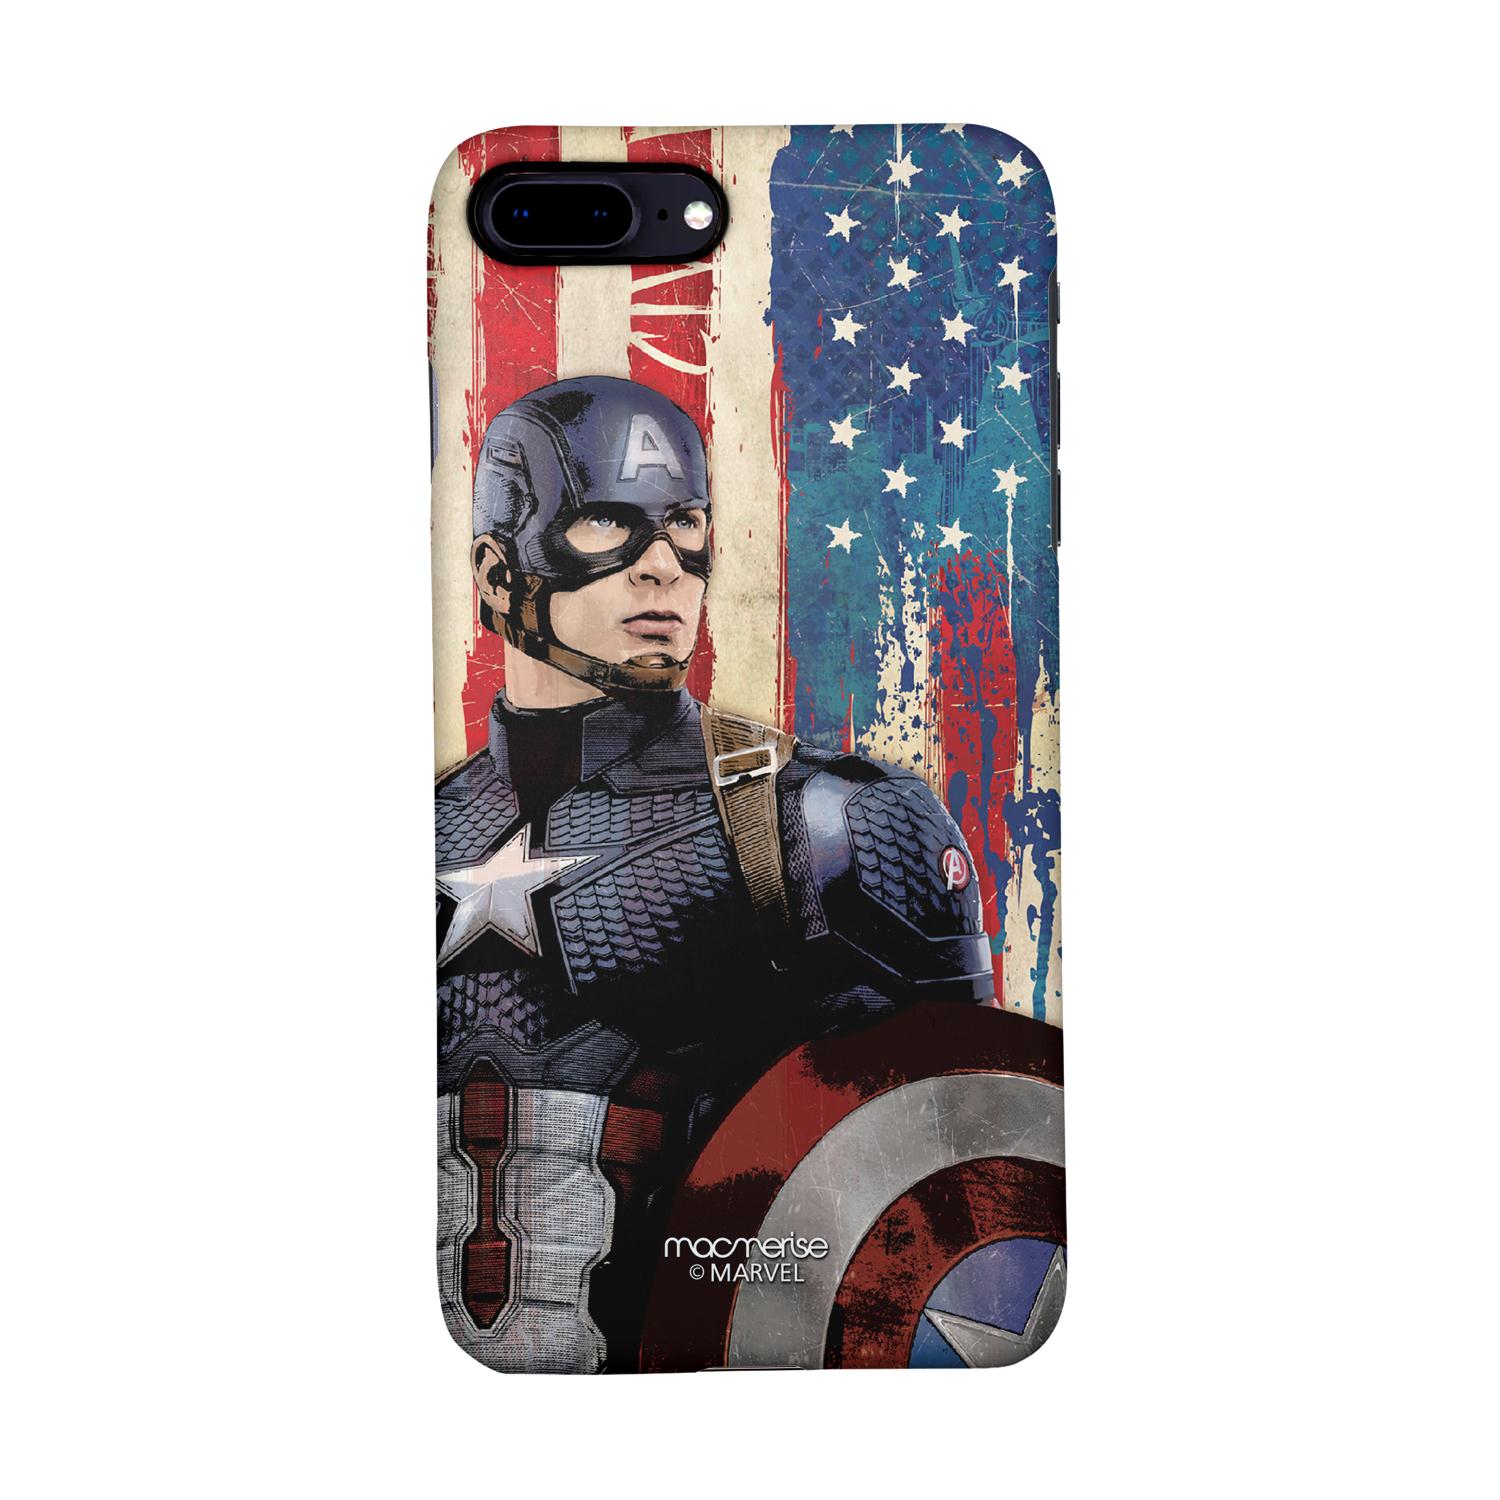 Buy American Captain - Sleek Phone Case for iPhone 8 Plus Online